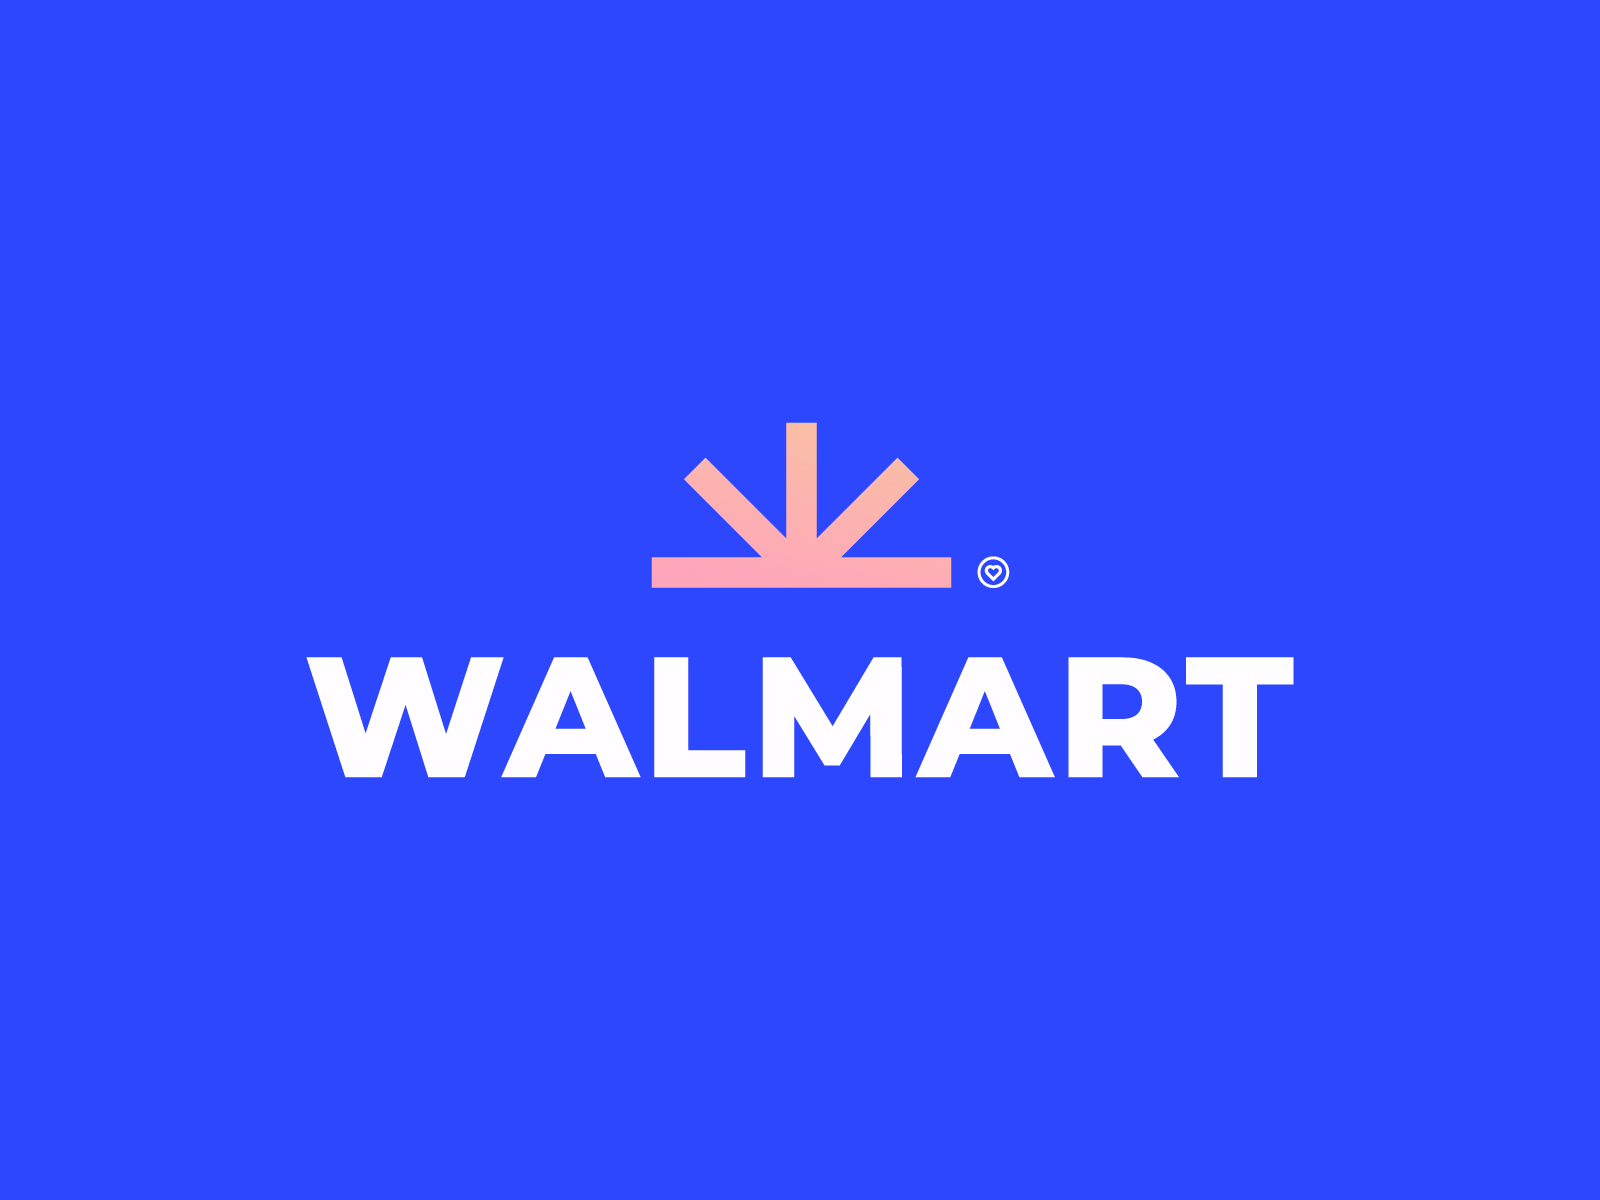 Walmart Logo Rebrand by Fabian Arbor on Dribbble